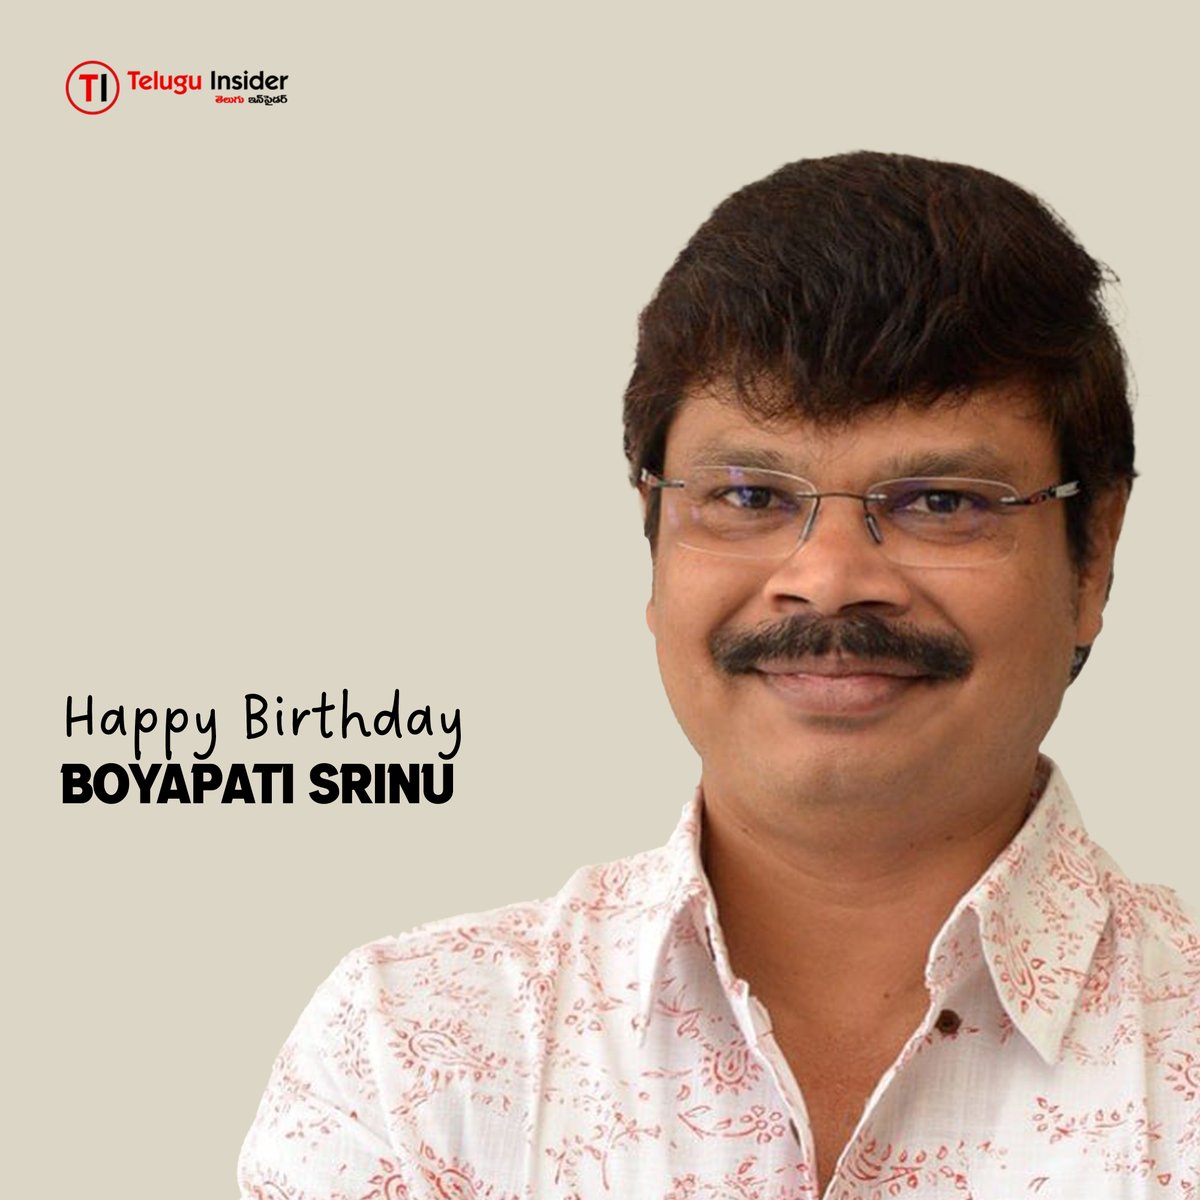 Sending warm birthday wishes to the dynamic and mass director, Boyapati Srinu! Wishing you a year filled with blockbuster films!

 #HBDBoyapatiSrinu #BoyapatiSreenu #HappyBirthdayBoyapatiSrinu #TeluguInsider